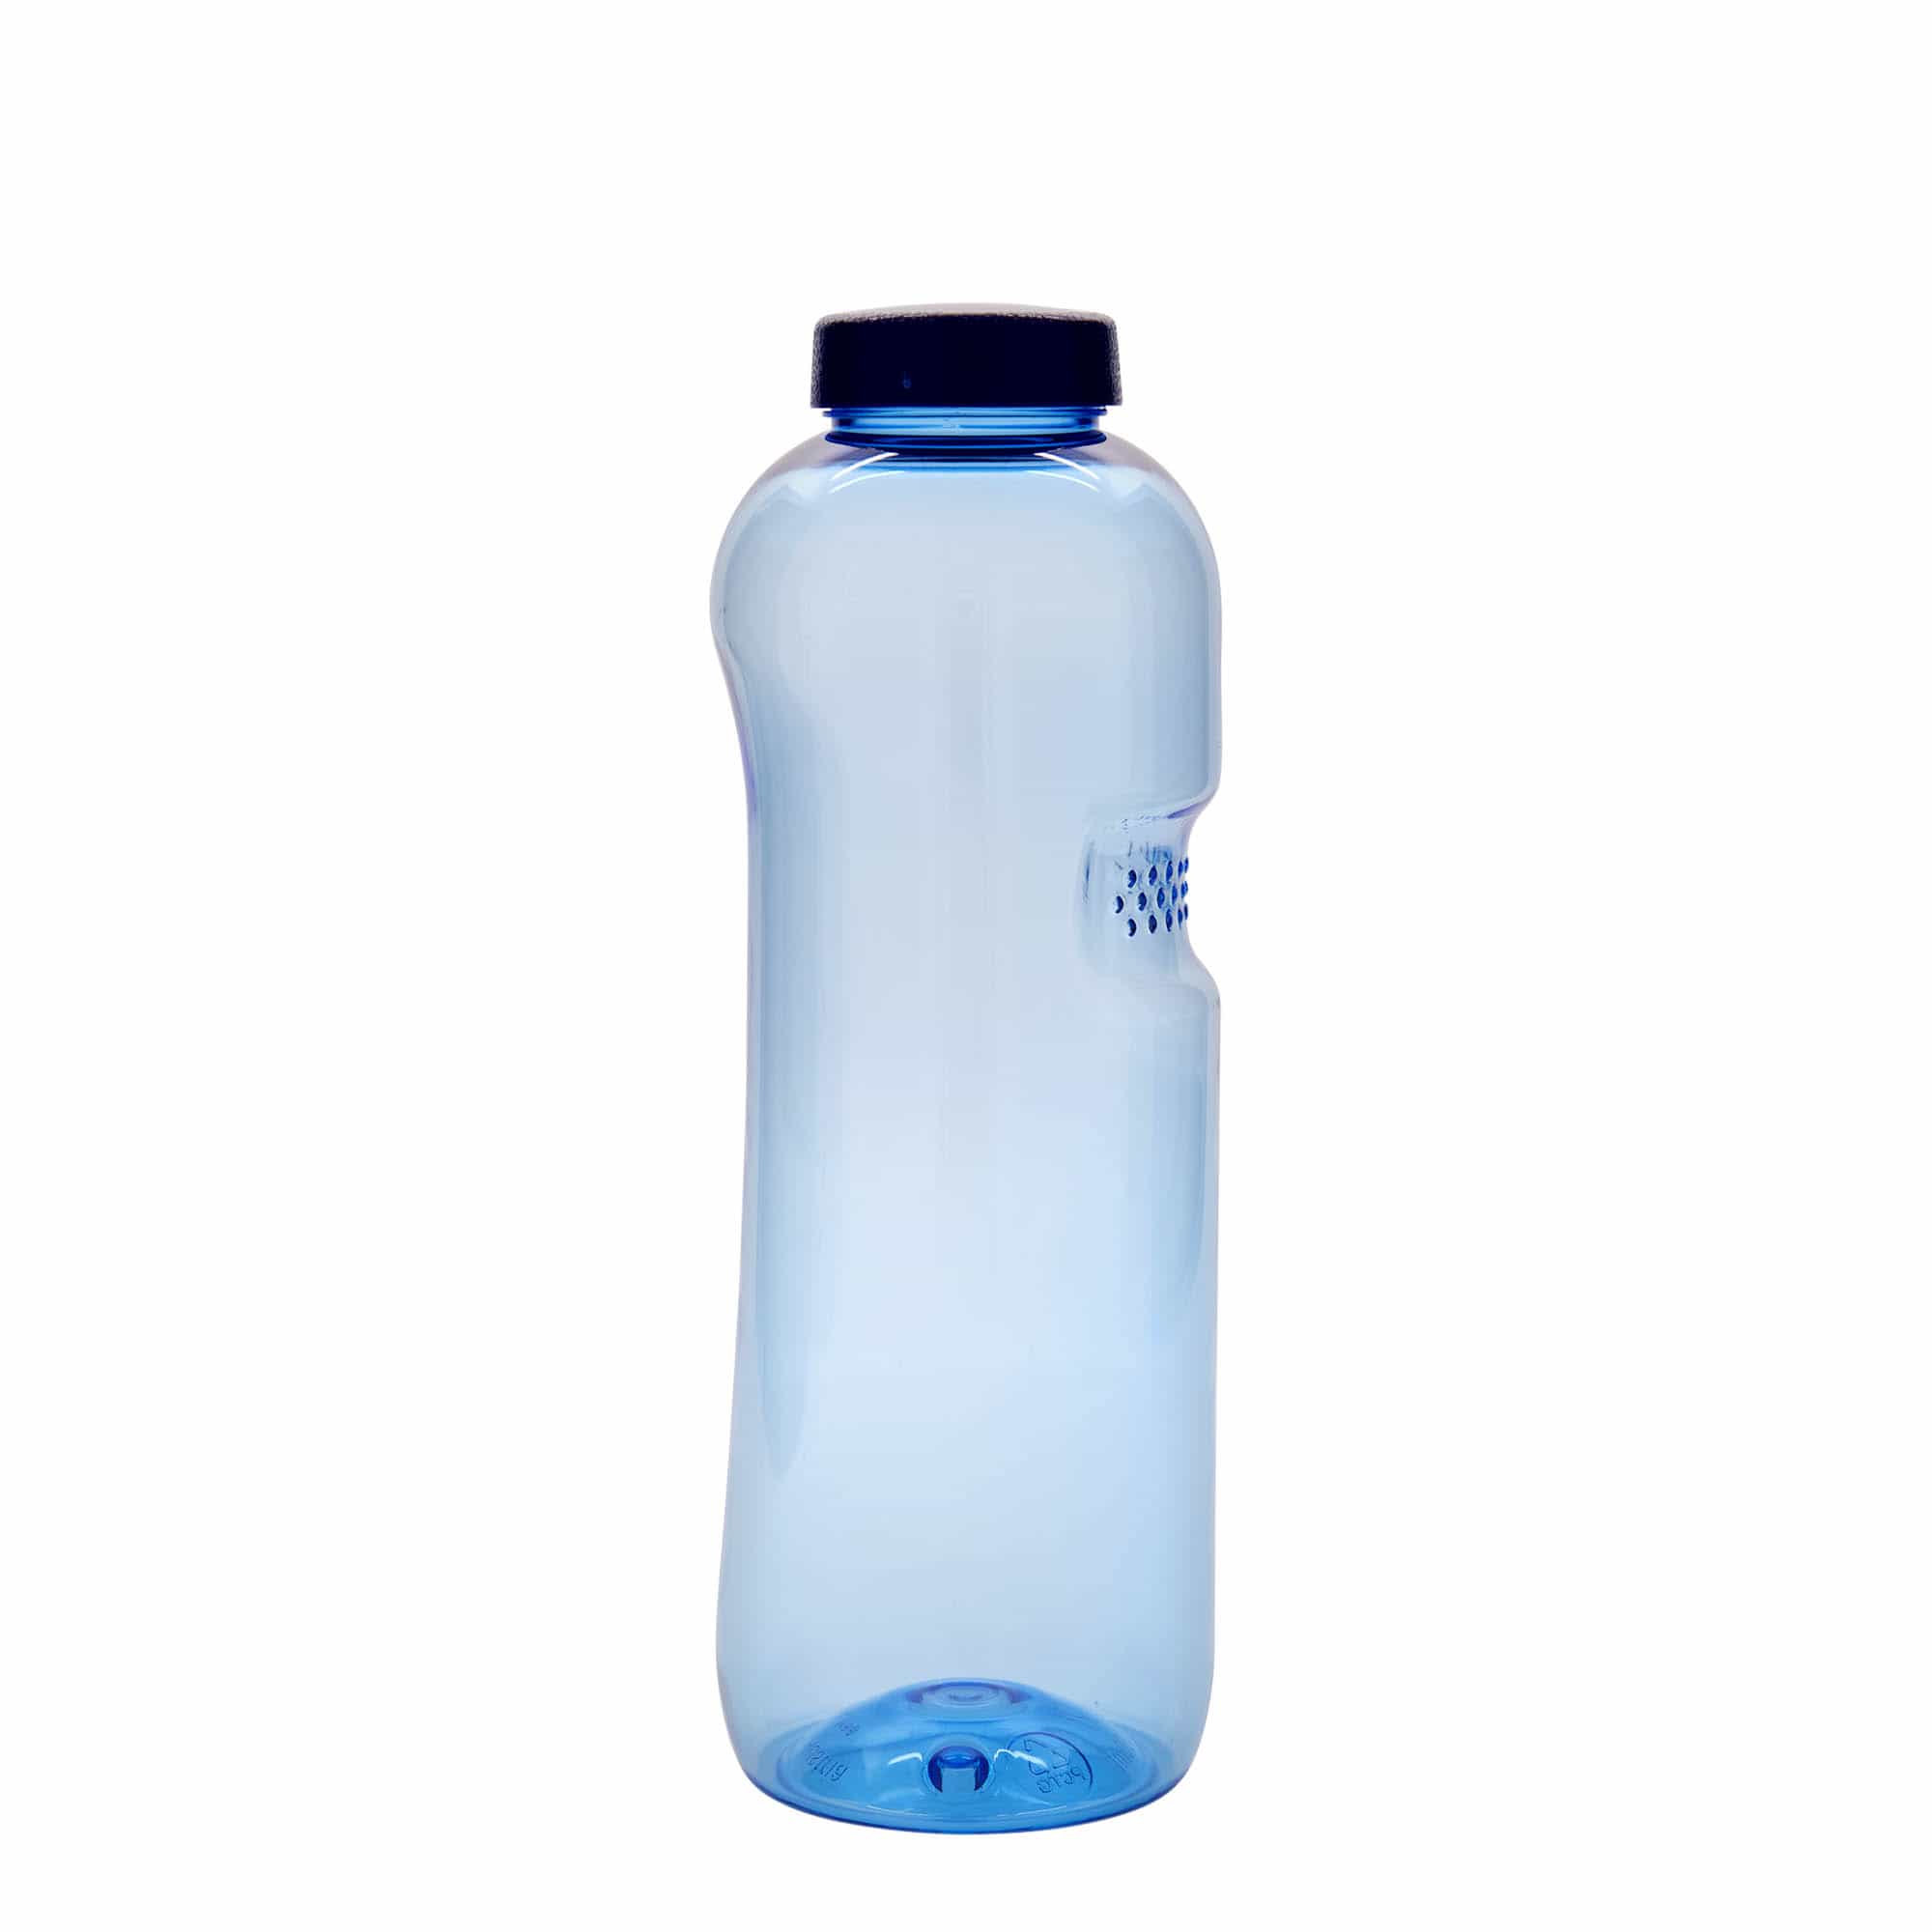 1,000 ml PET water bottle 'Kavodrink', plastic, blue